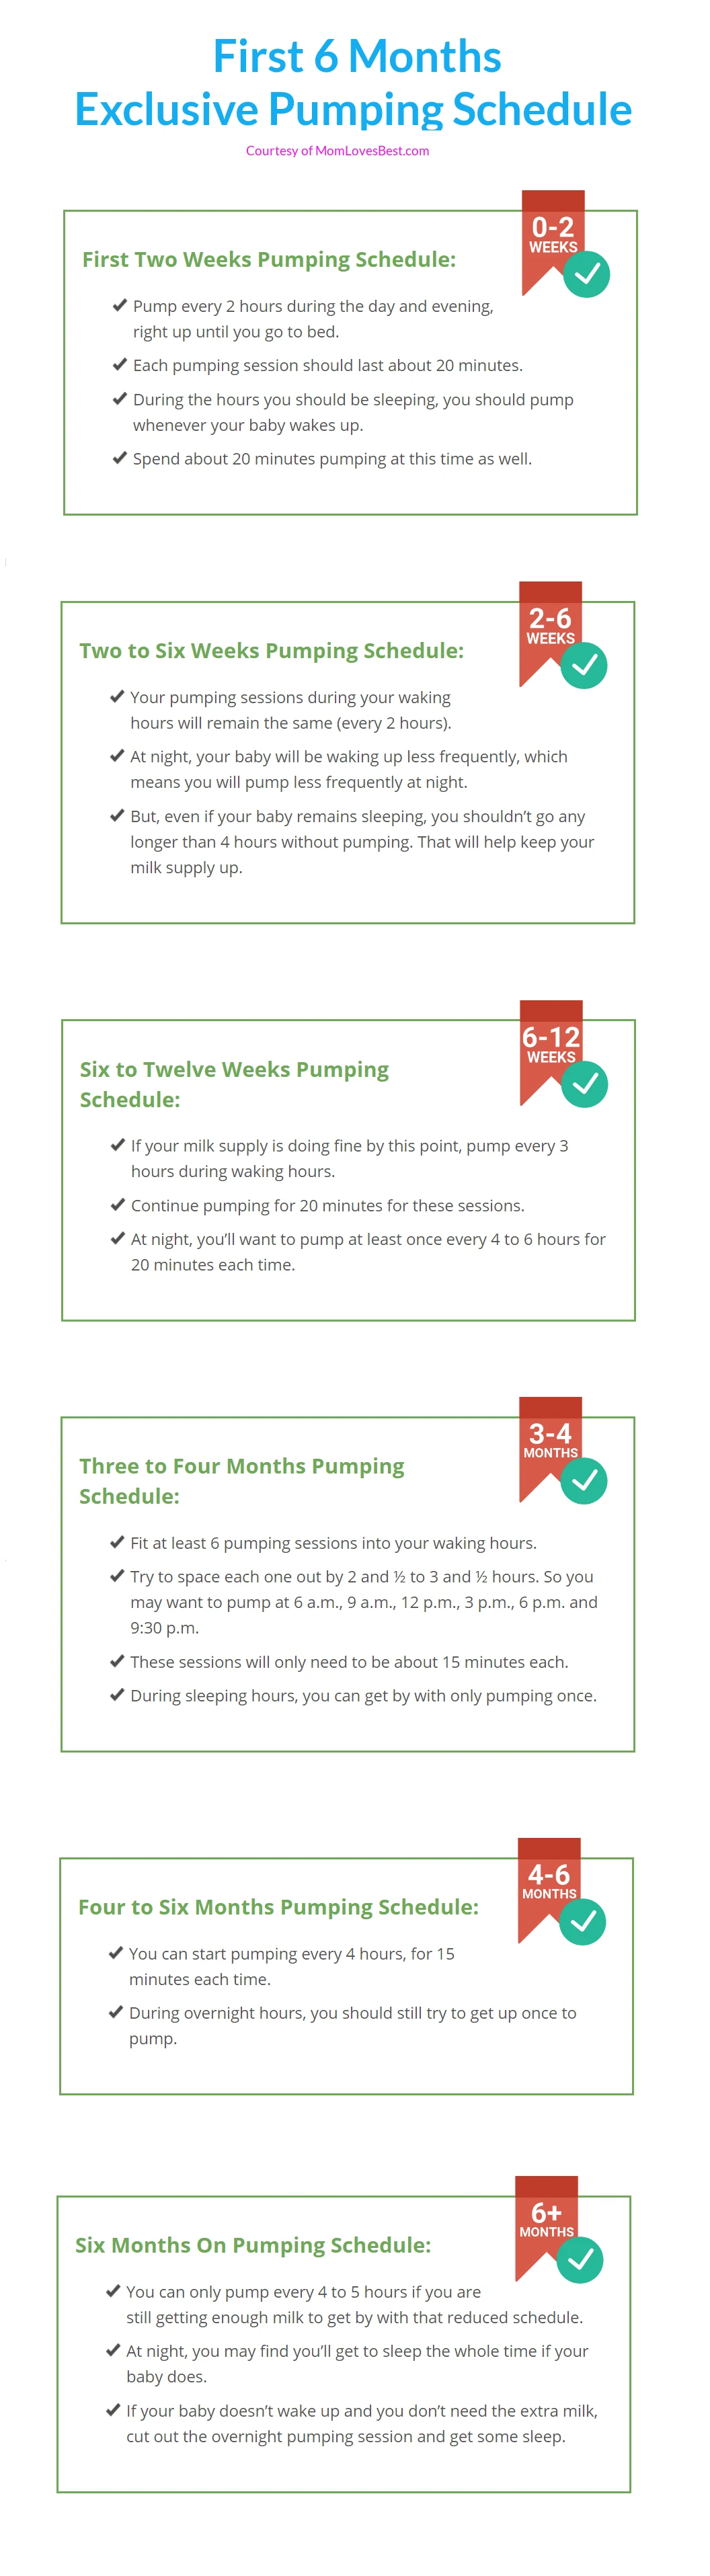 7 Ways to Make Pumping Easier - Exclusive Pumping